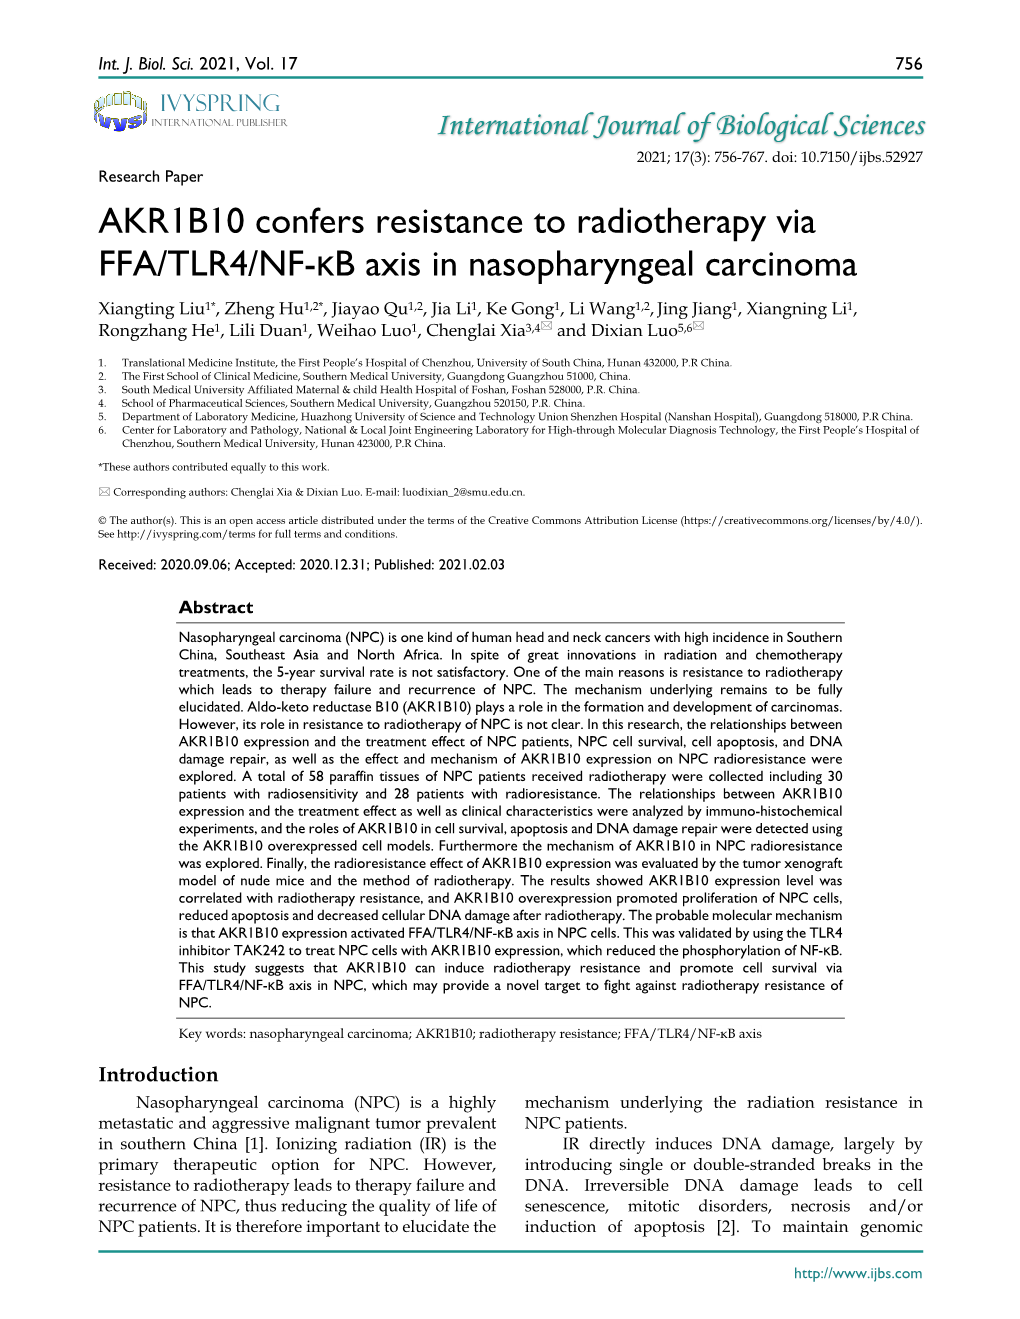 AKR1B10 Confers Resistance to Radiotherapy Via FFA/TLR4/NF-Κb